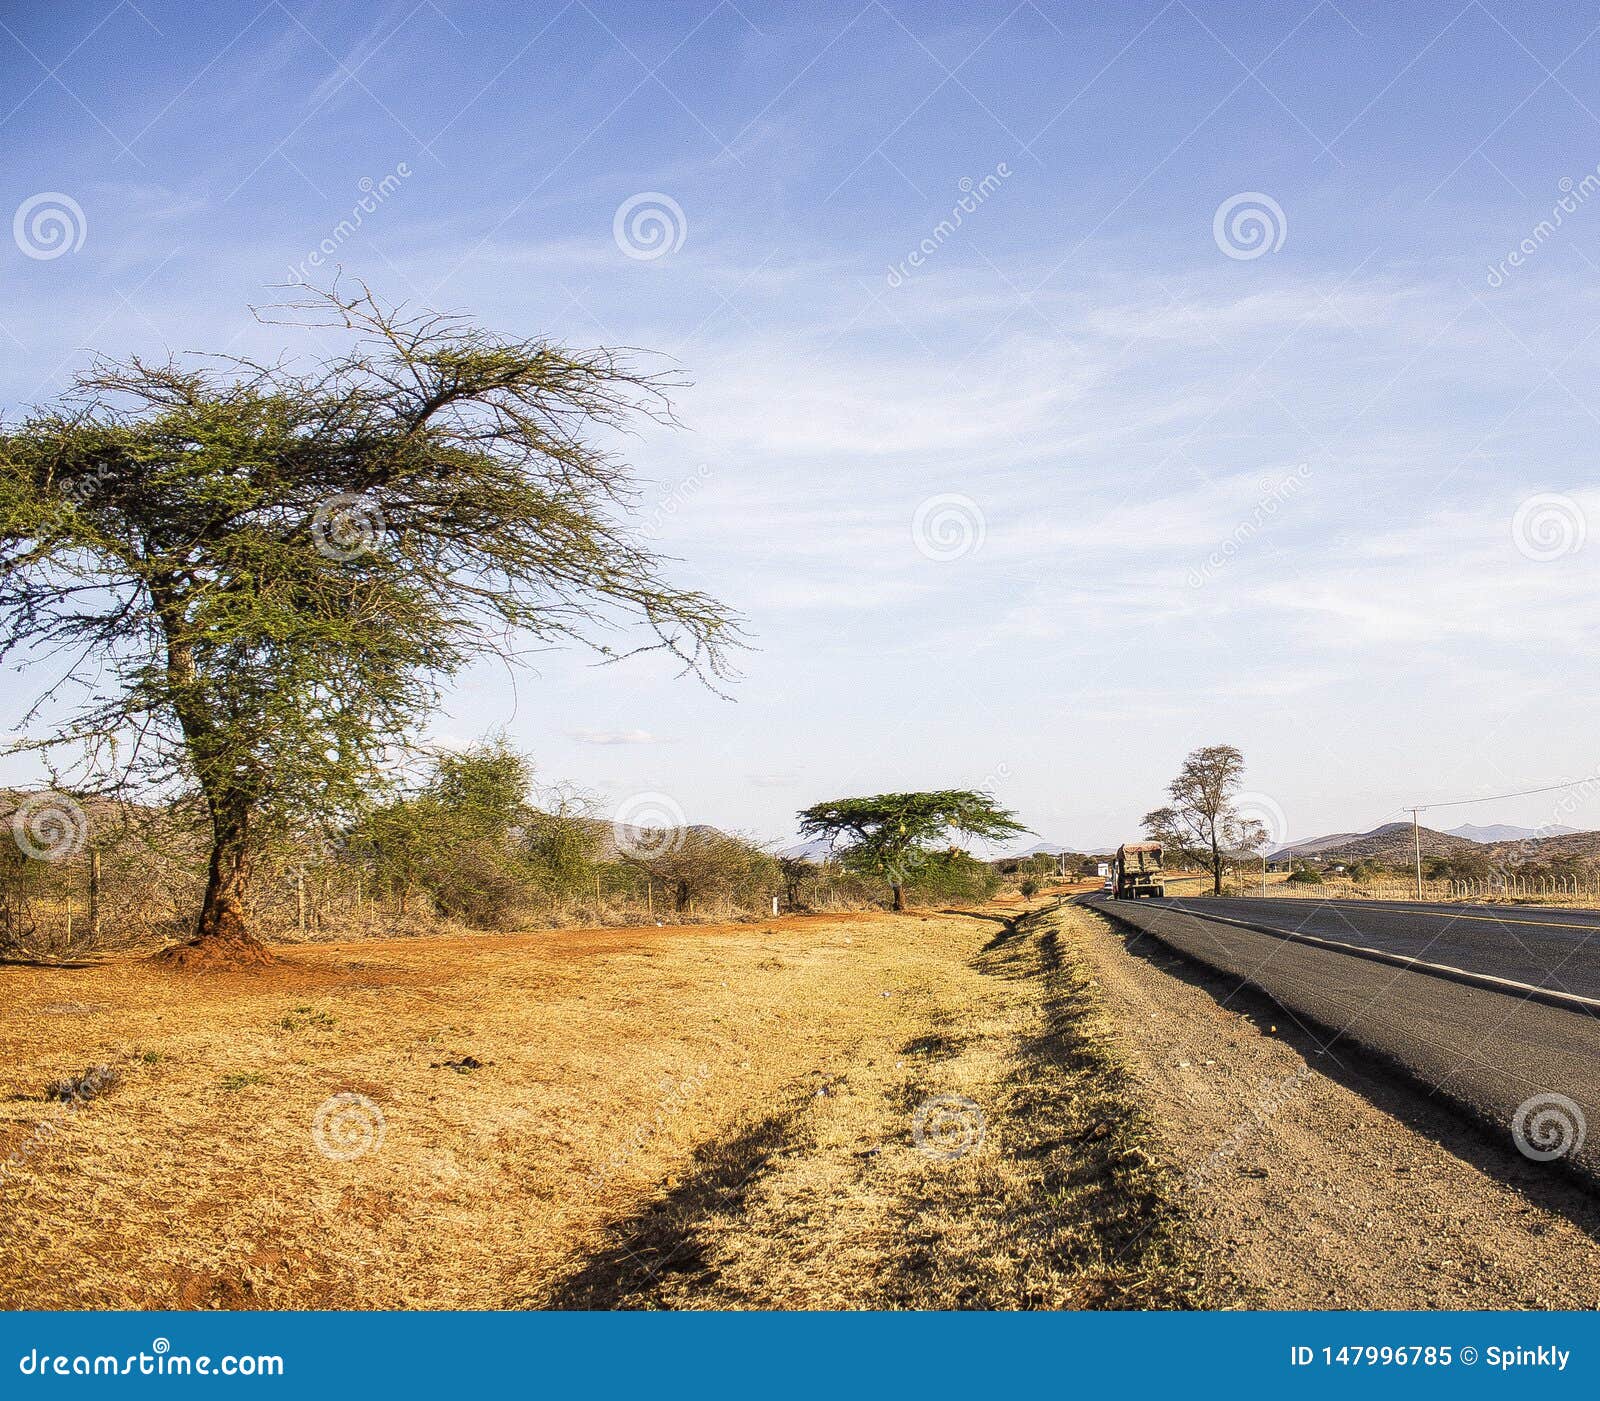 Landscape View of the Road Side Stock Image - Image of landscapes, blue:  147996785